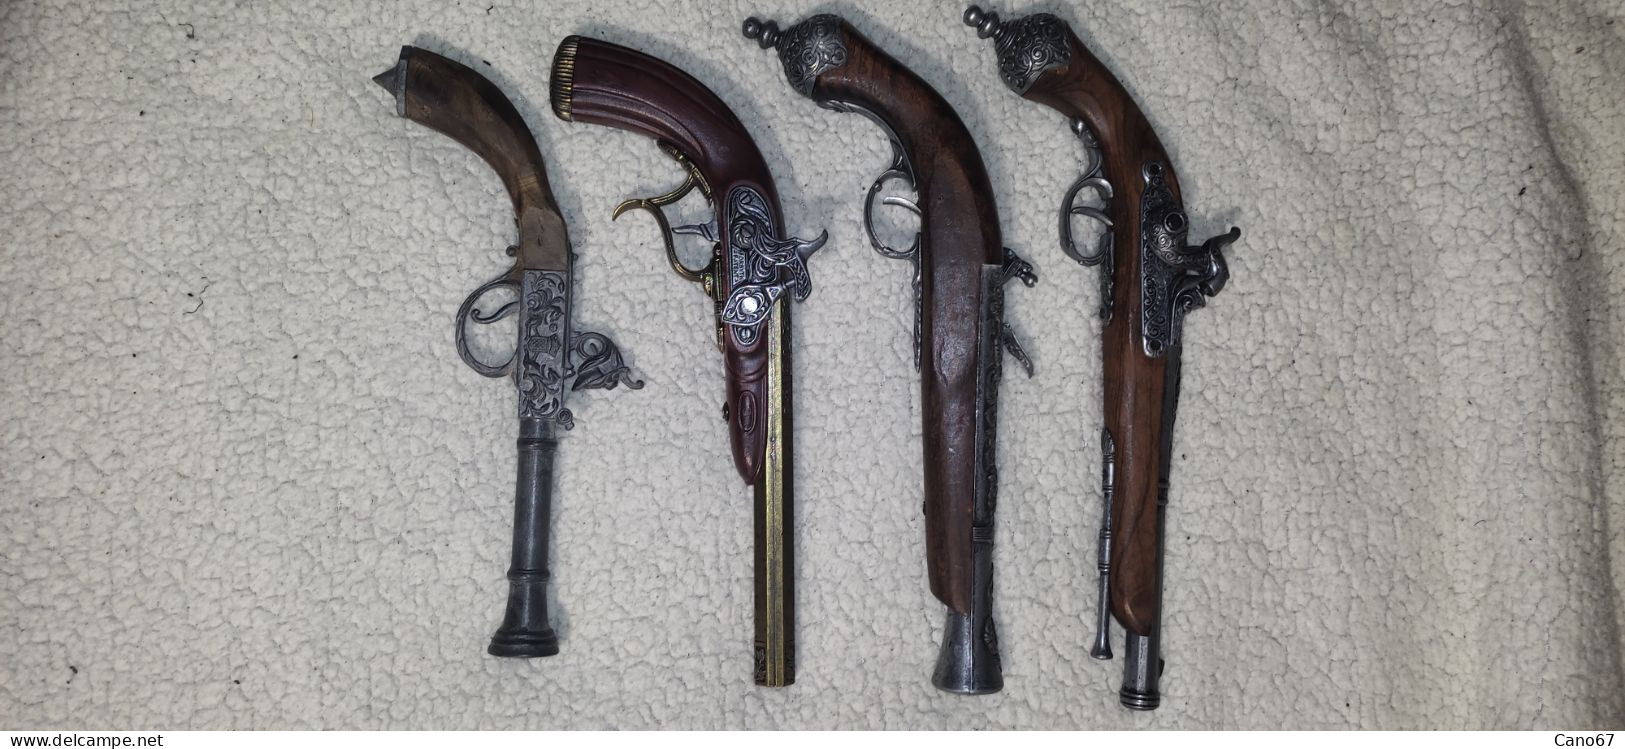 Replicas Armas Antiguas - Decorative Weapons